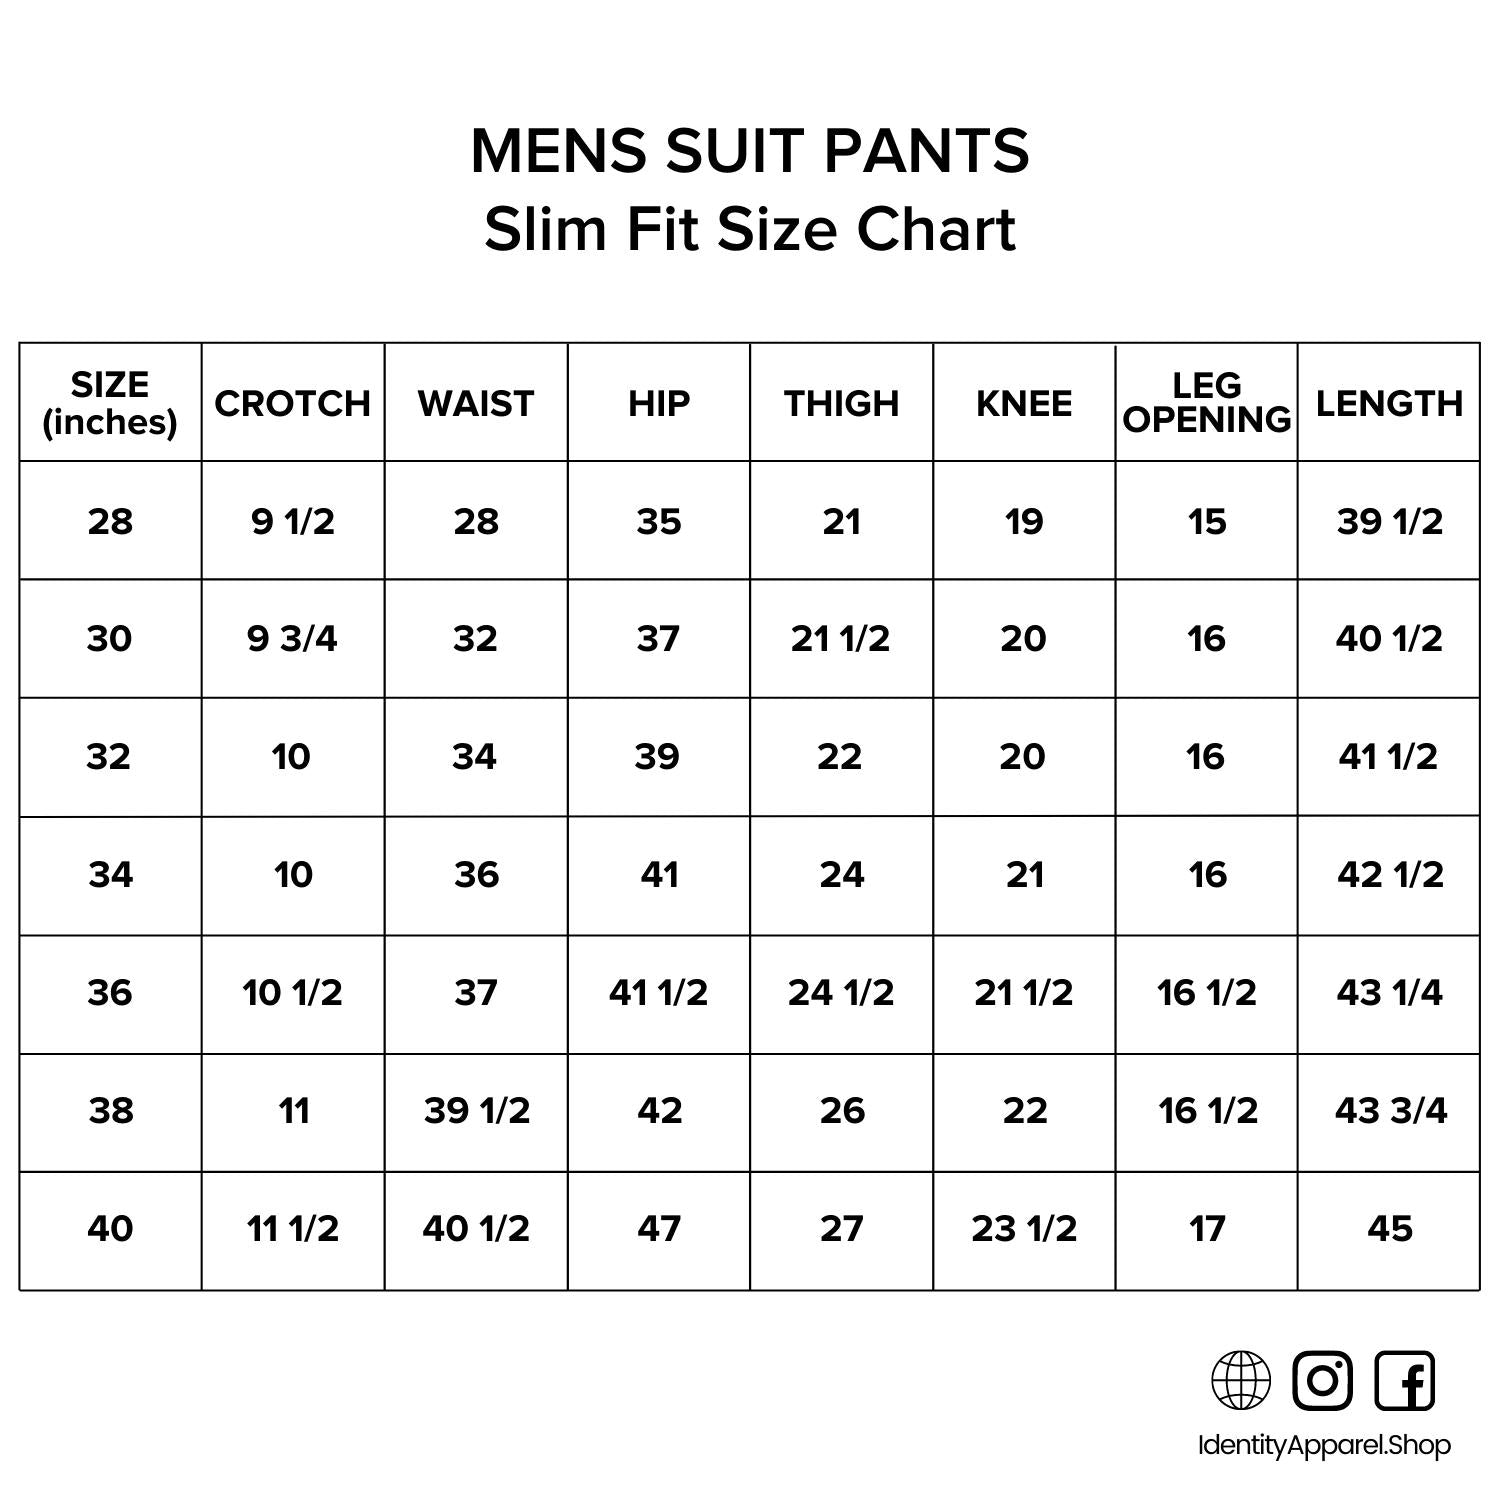 PROFILE Men's Corporate Wear Office Dress Pants - Black - IDENTITY Apparel Shop